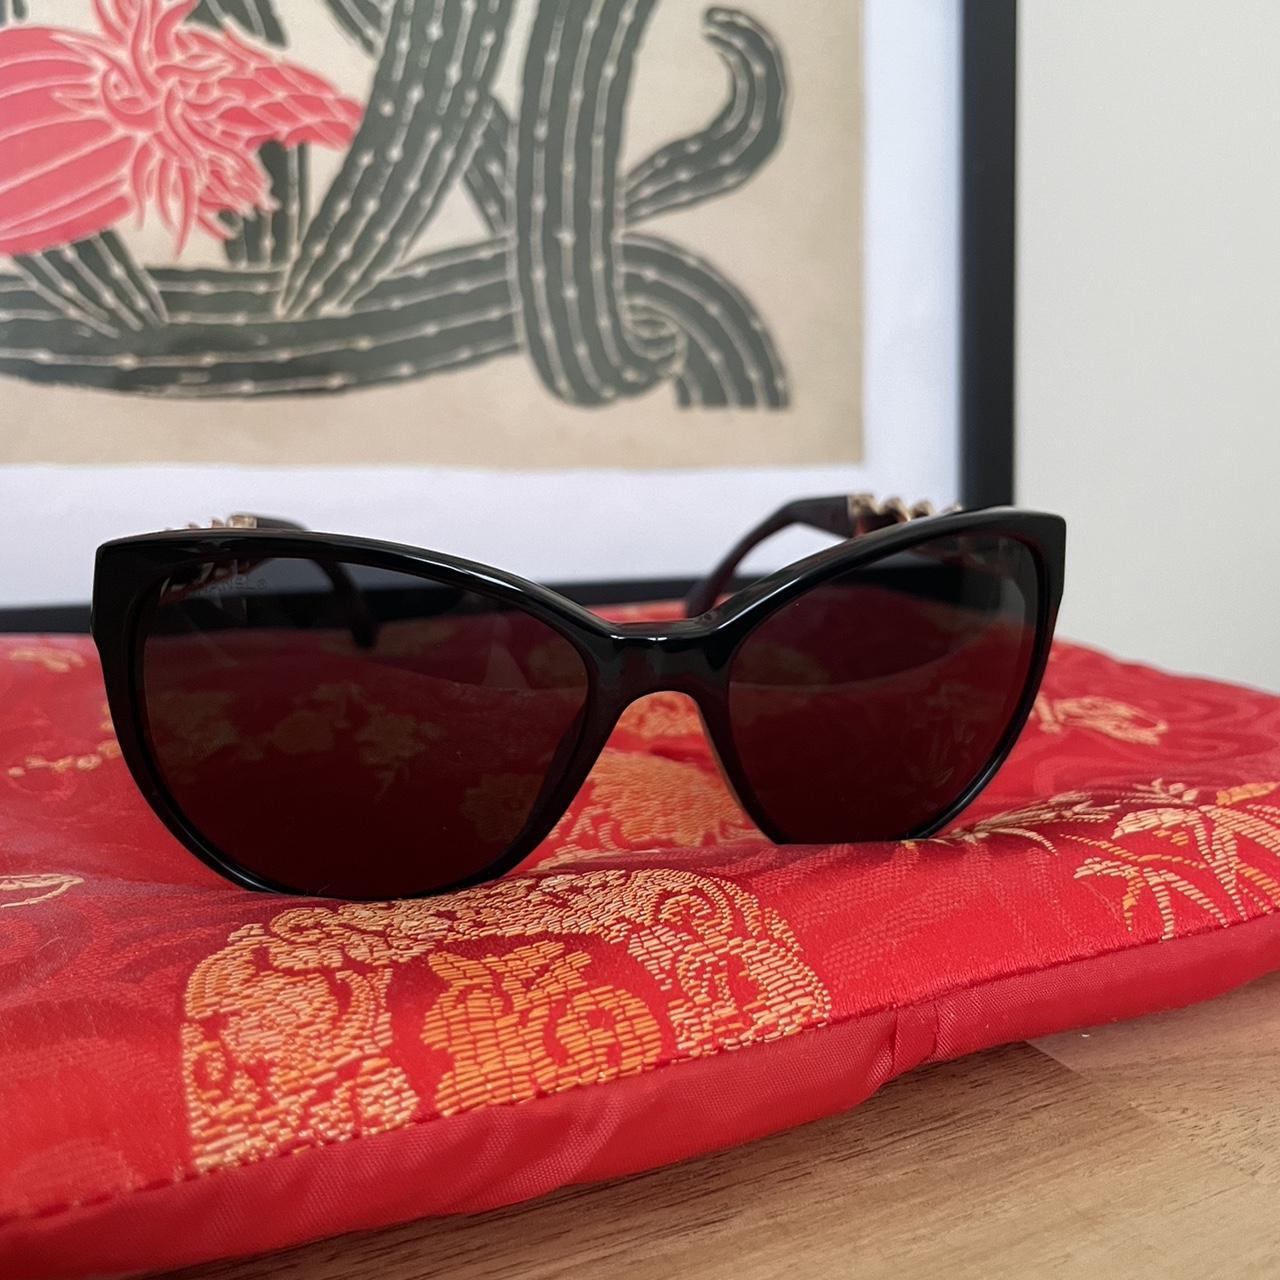 Chanel New Sunglasses - Depop